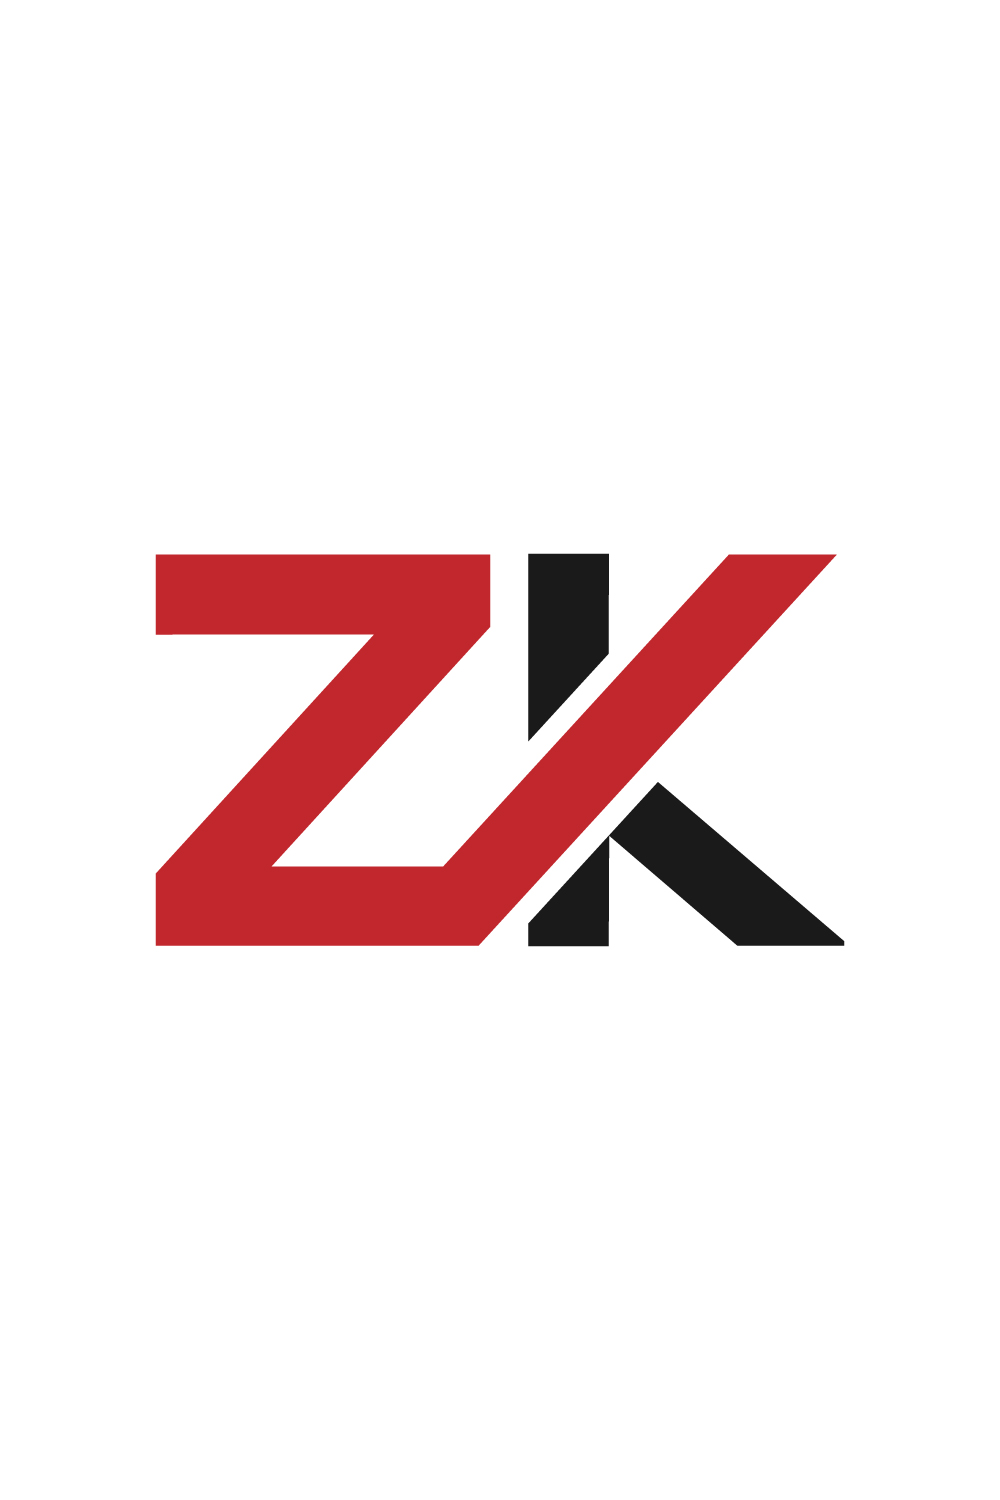 ZK logo design pinterest preview image.